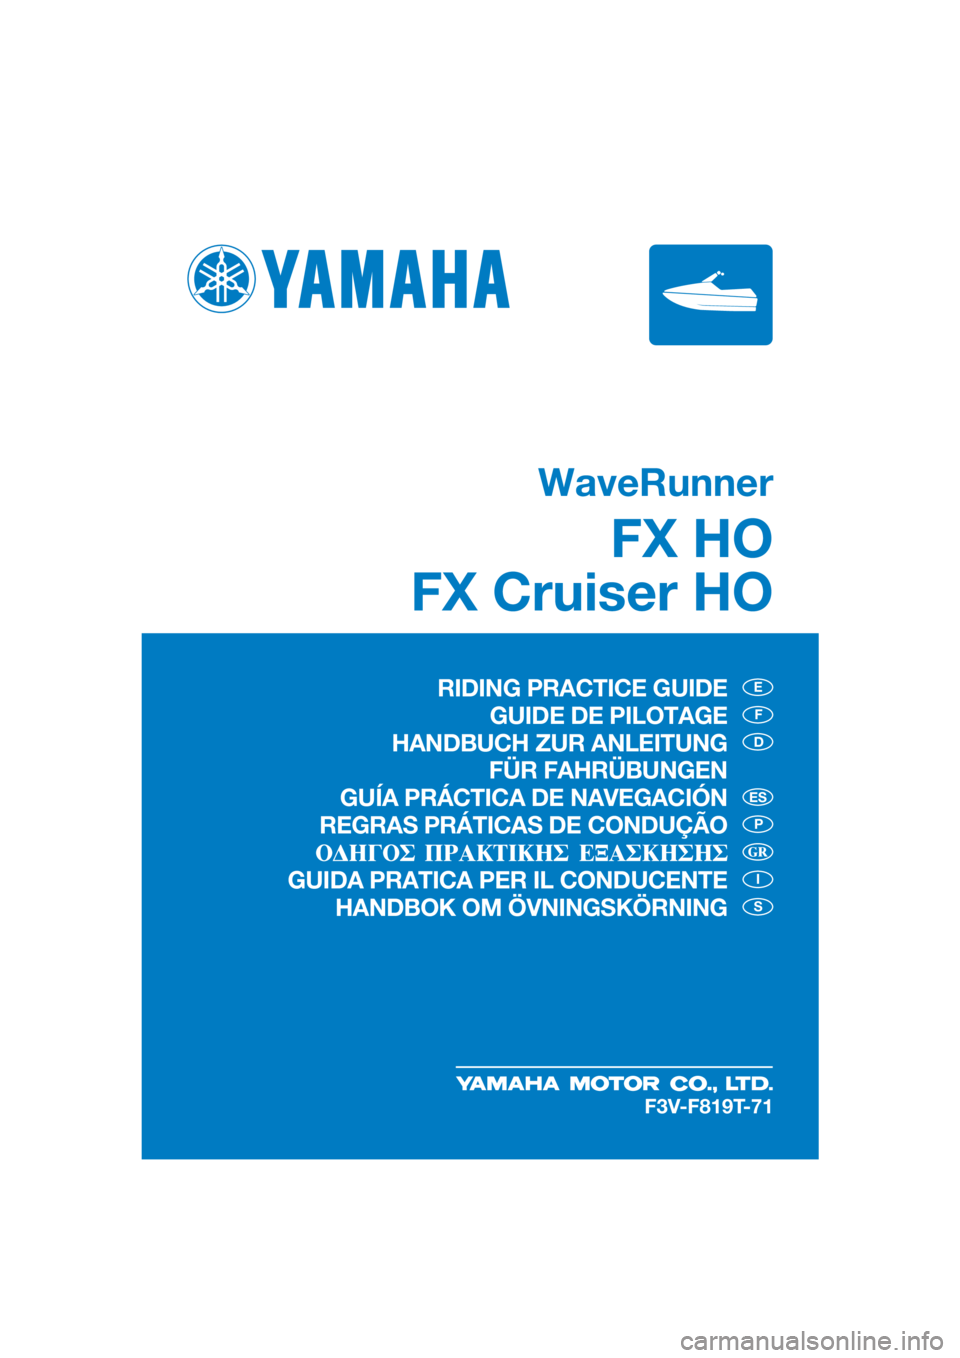 YAMAHA FX HO 2020  Manuale de Empleo (in Spanish) 